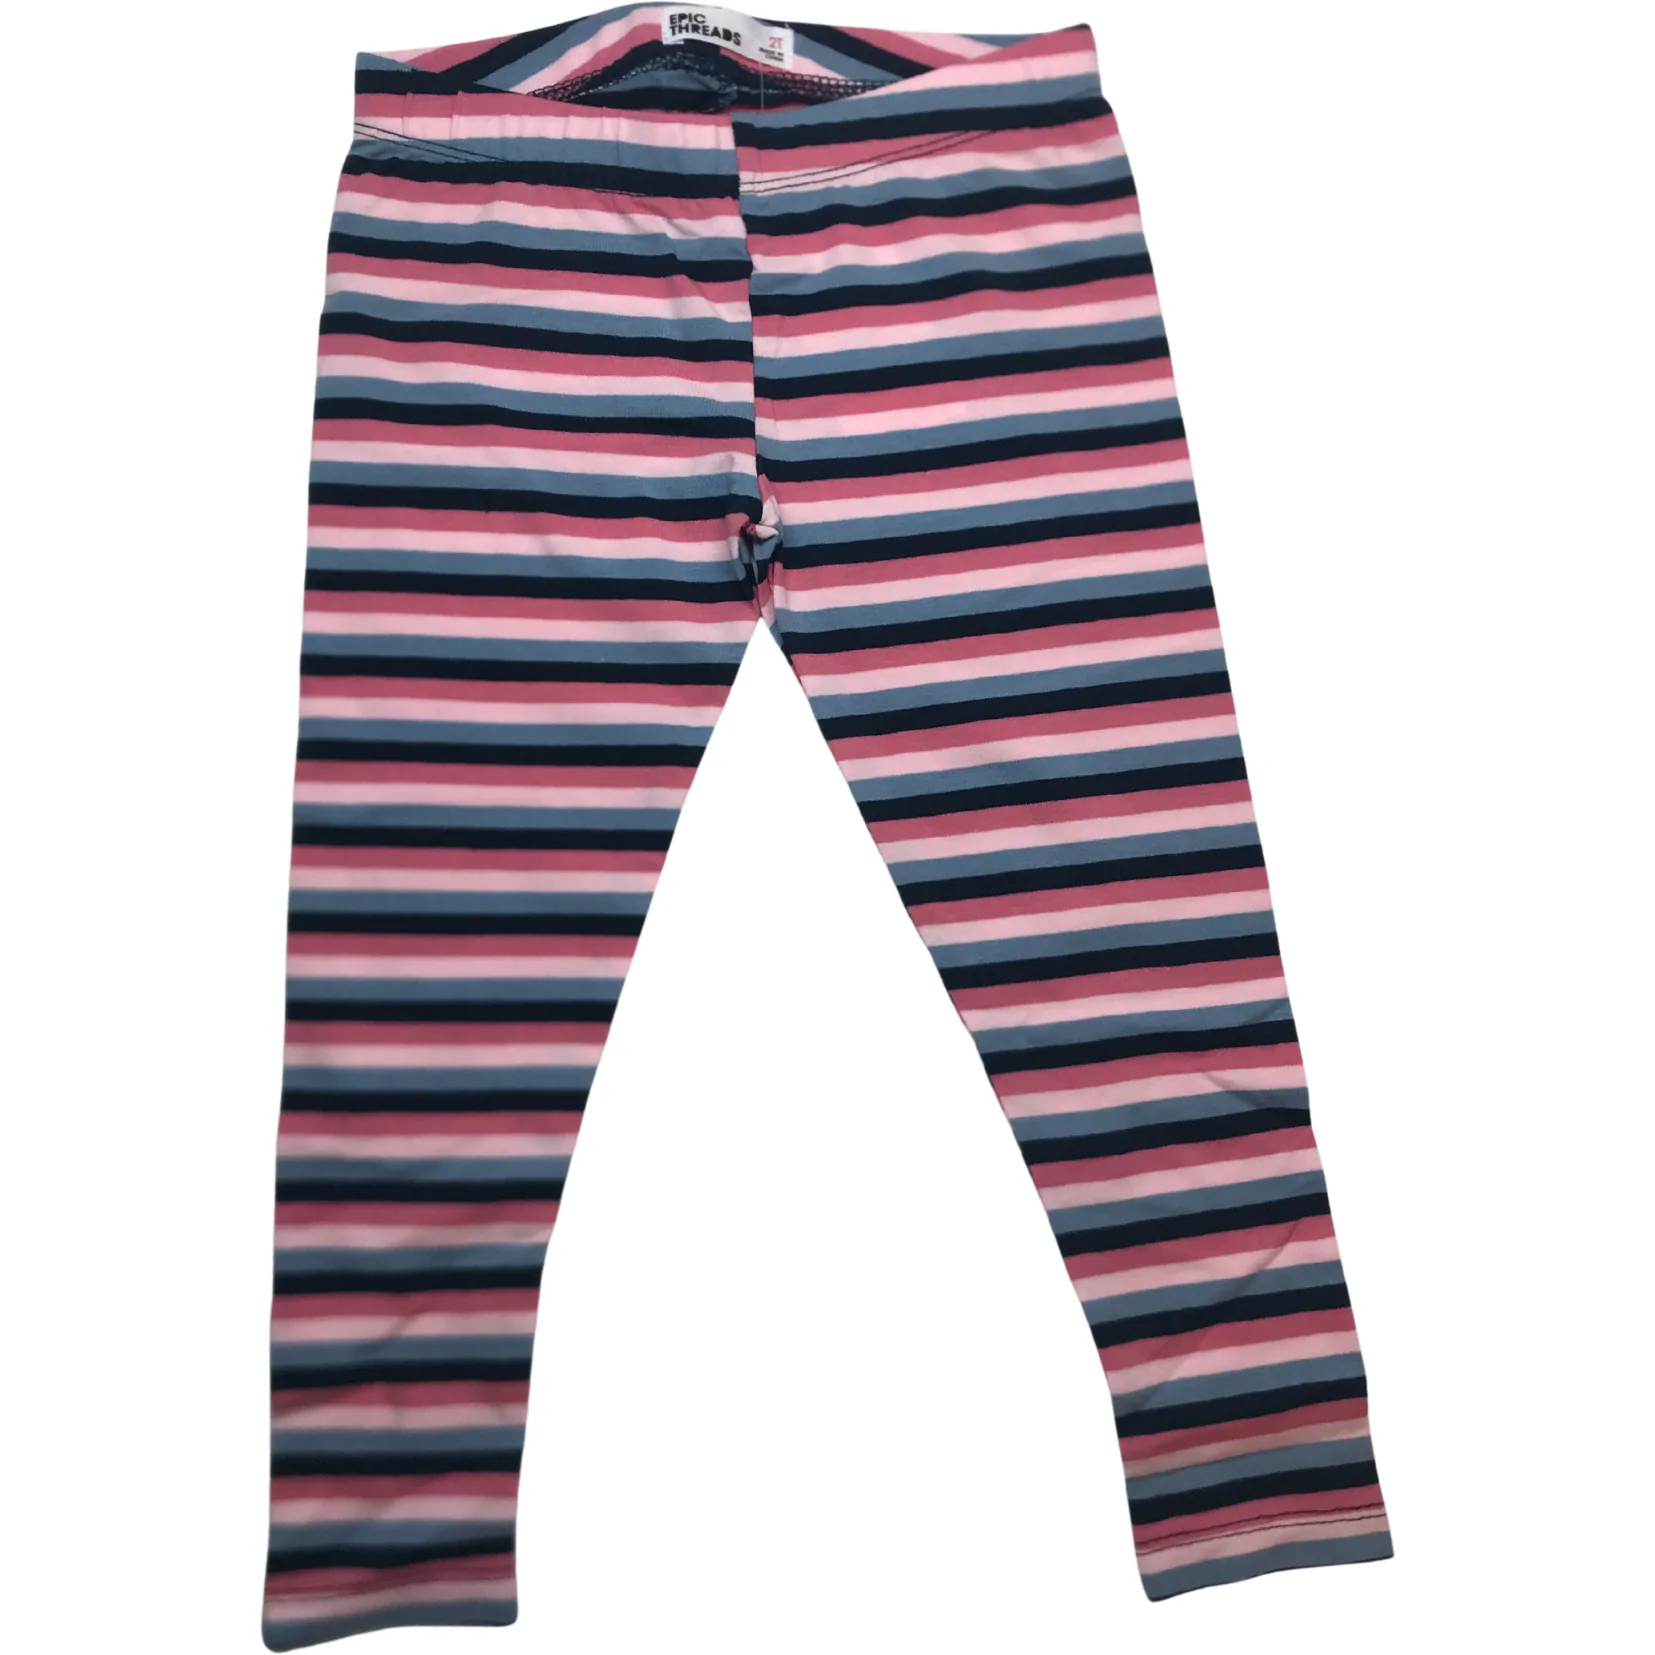 Epic Threads Girl's Leggings: Striped Design / Pink & Blue / Various Sizes